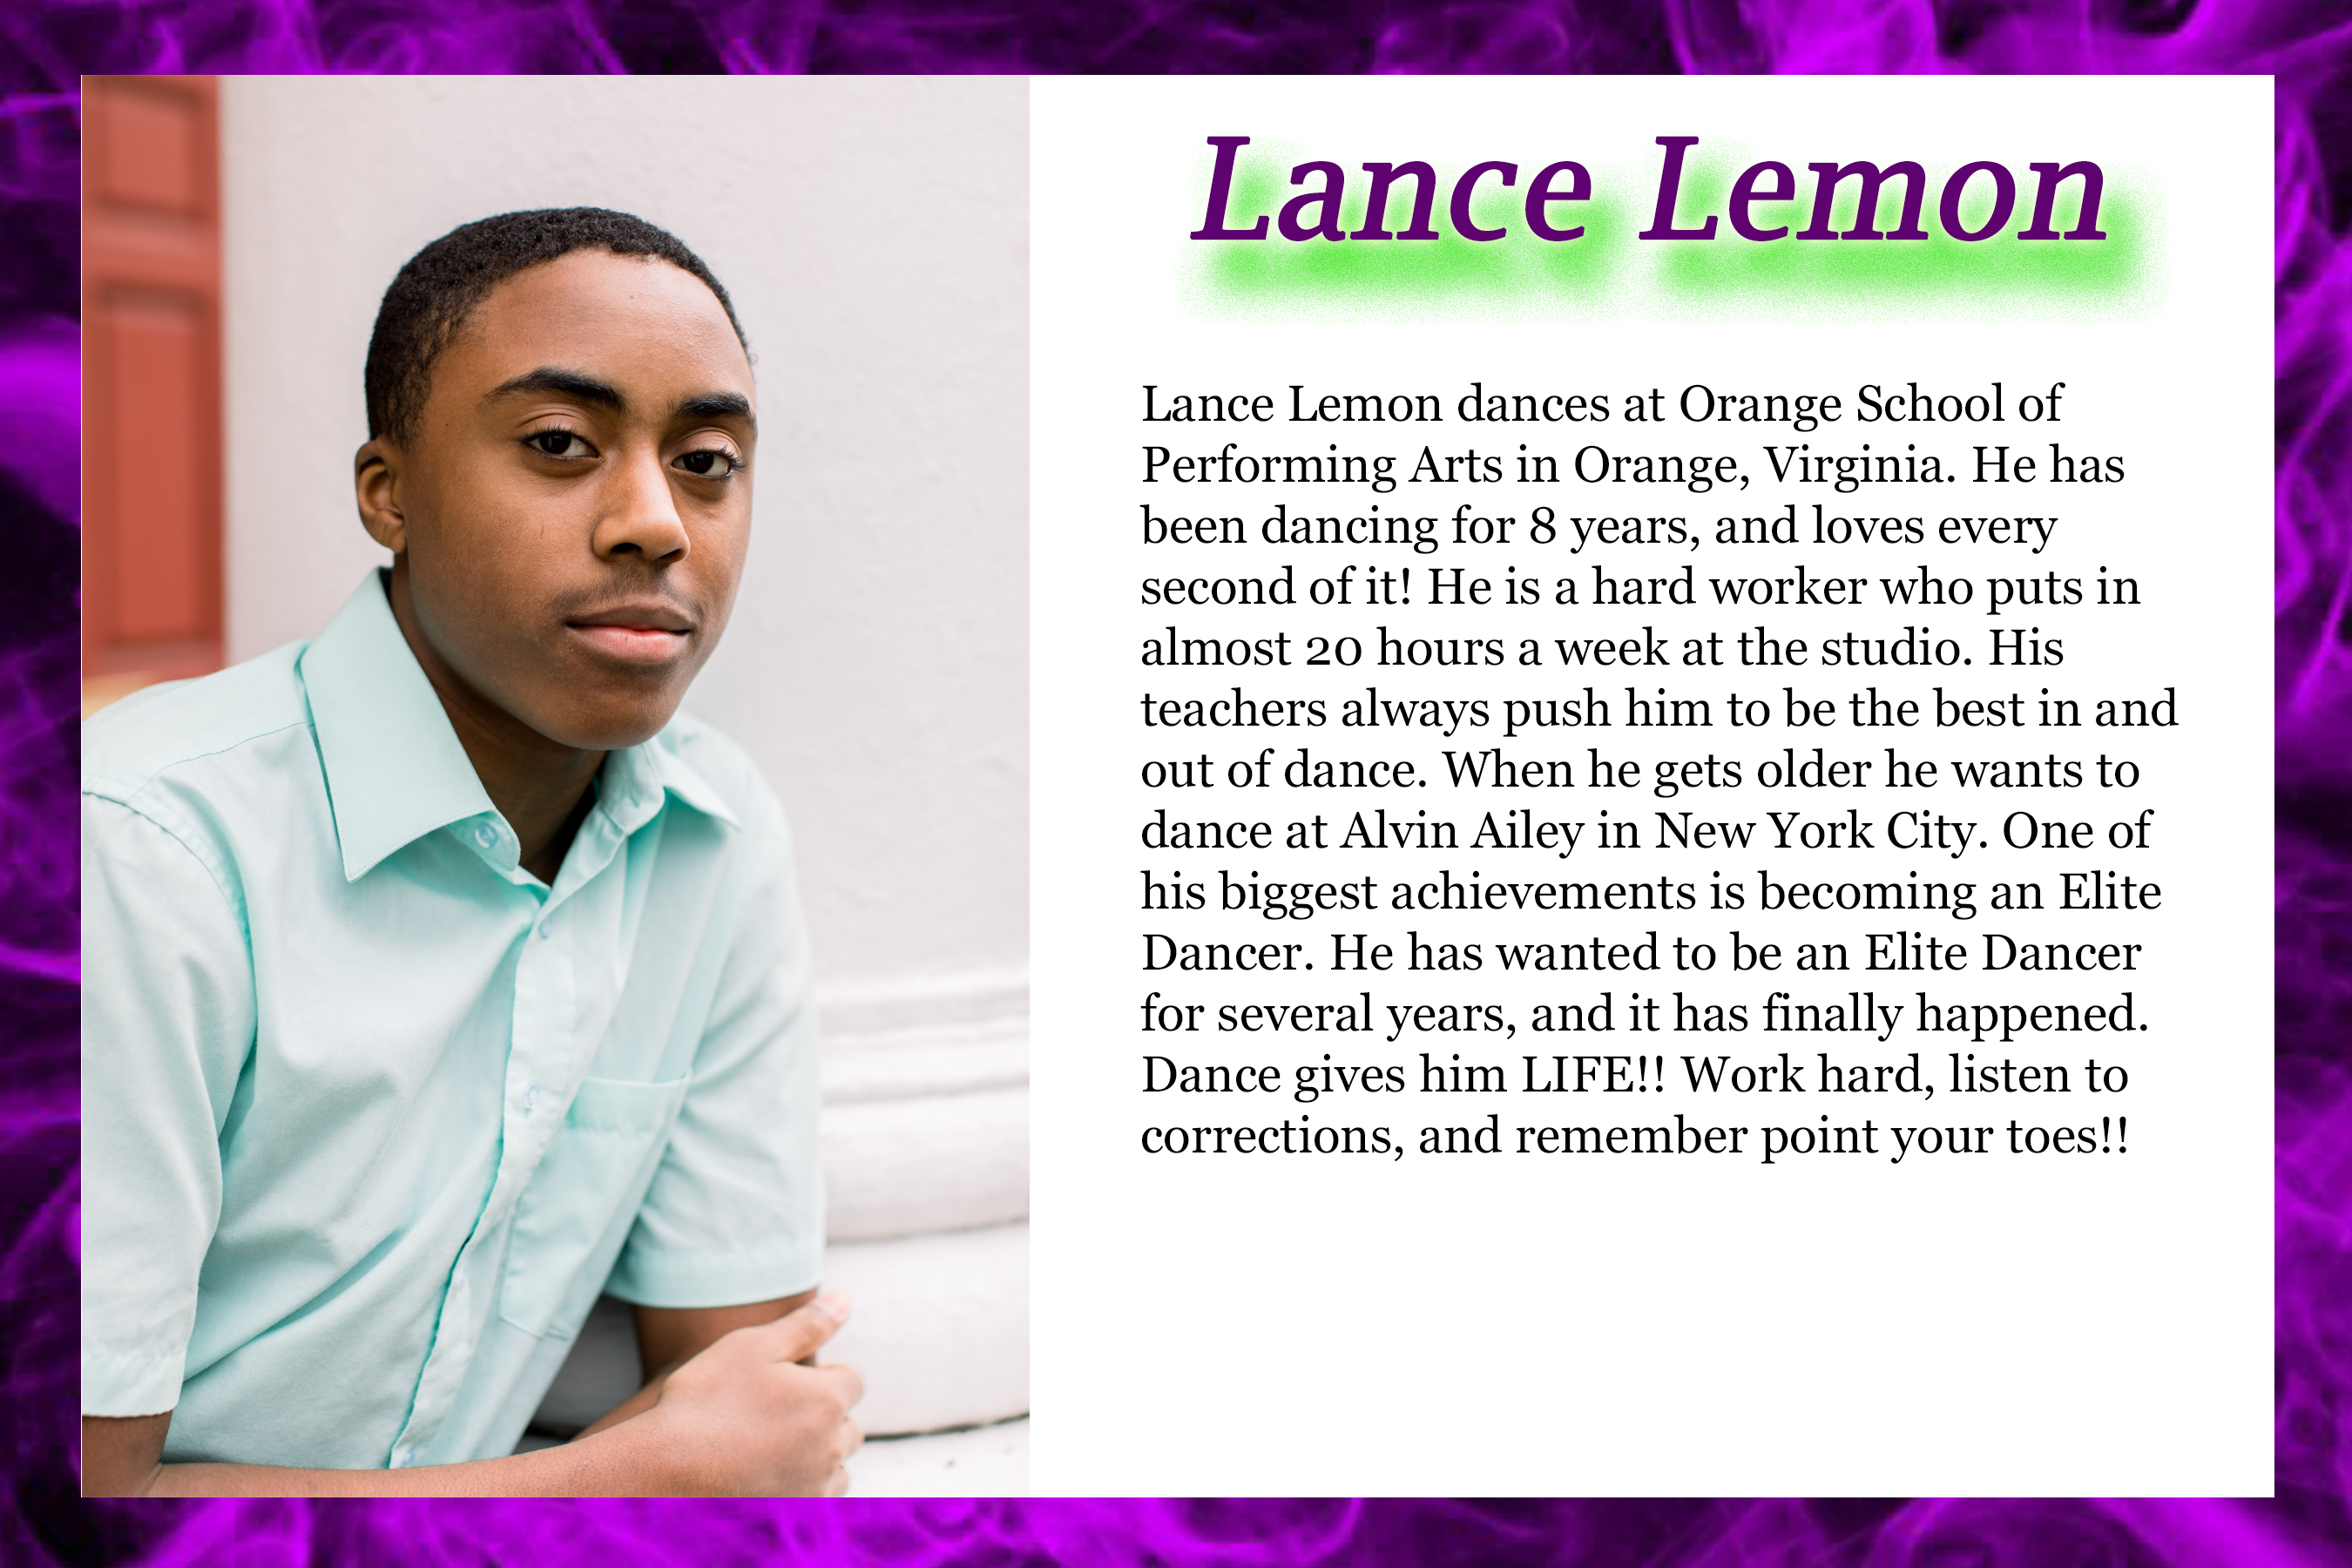 Lance Lemon